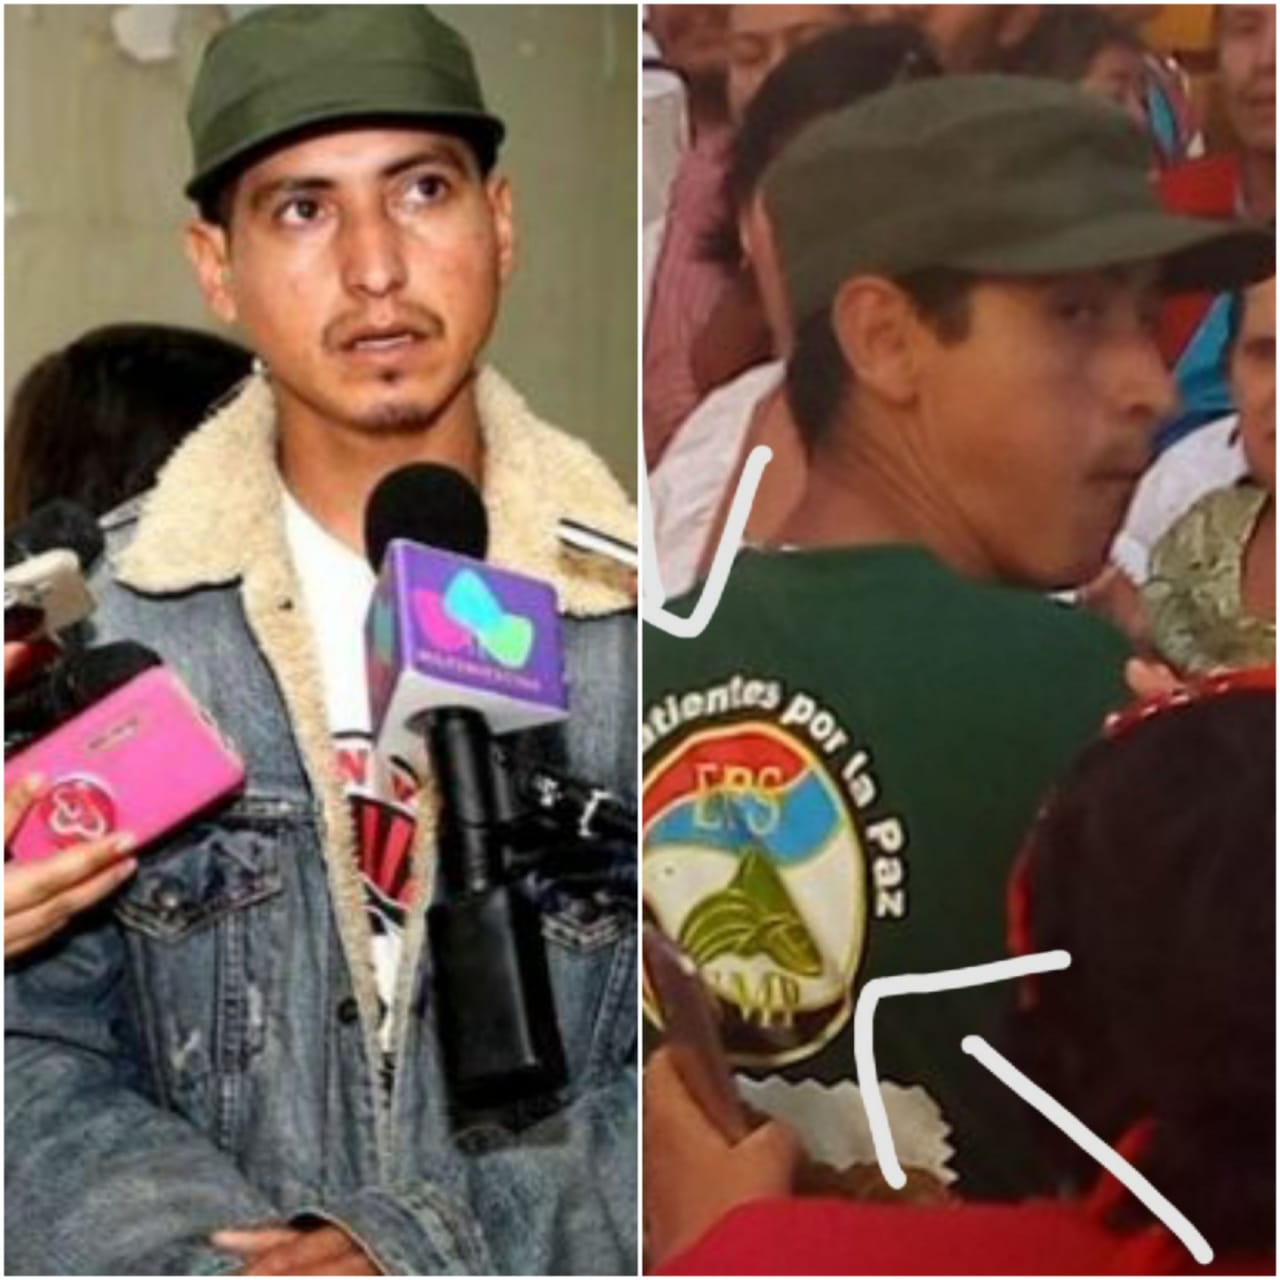 Identifican al paramilitar que arrebató la bandera de Nicaragua a una joven durante una actividad religiosa